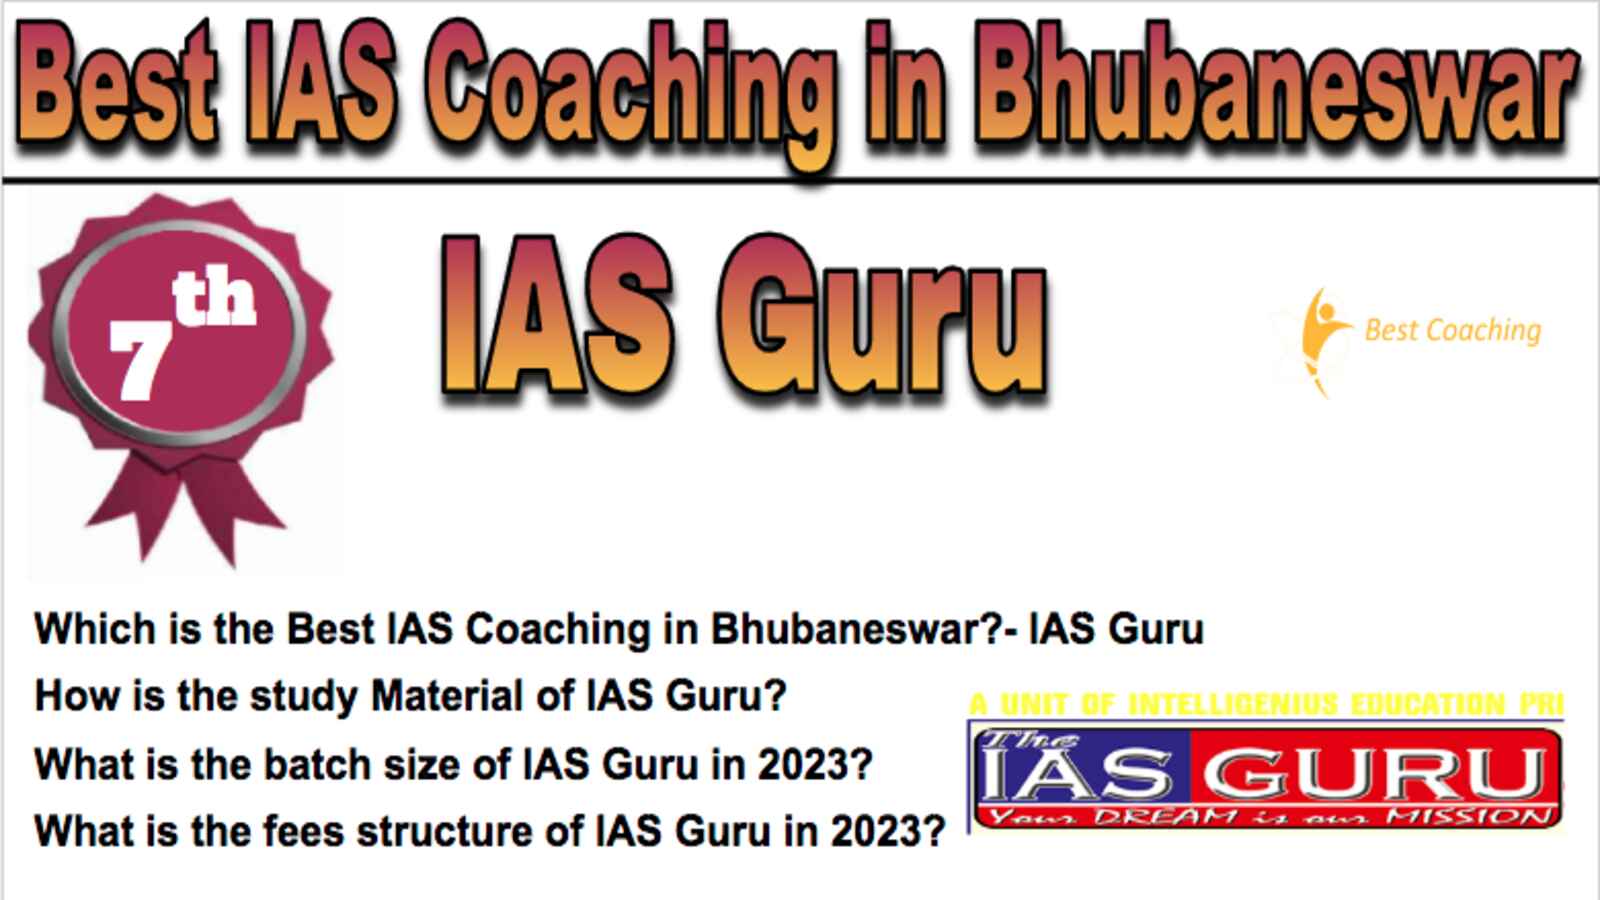 7th Best IAS Coaching in Bhubaneswar 2023